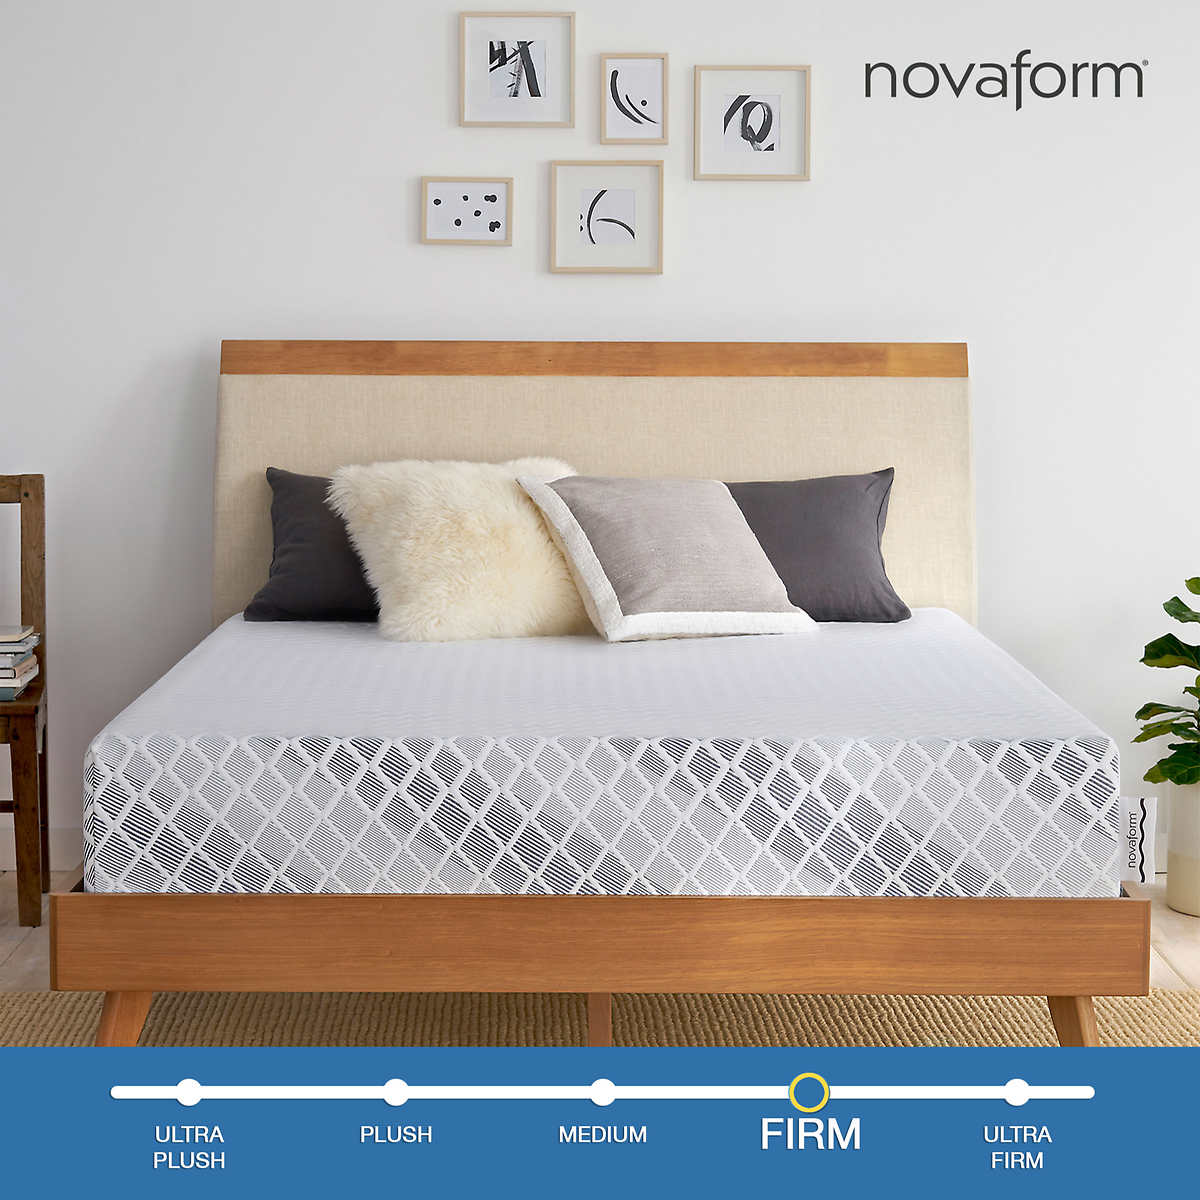 Novaform 12 Advanced Back Support, Costco Bed In A Box Twin Xl Size